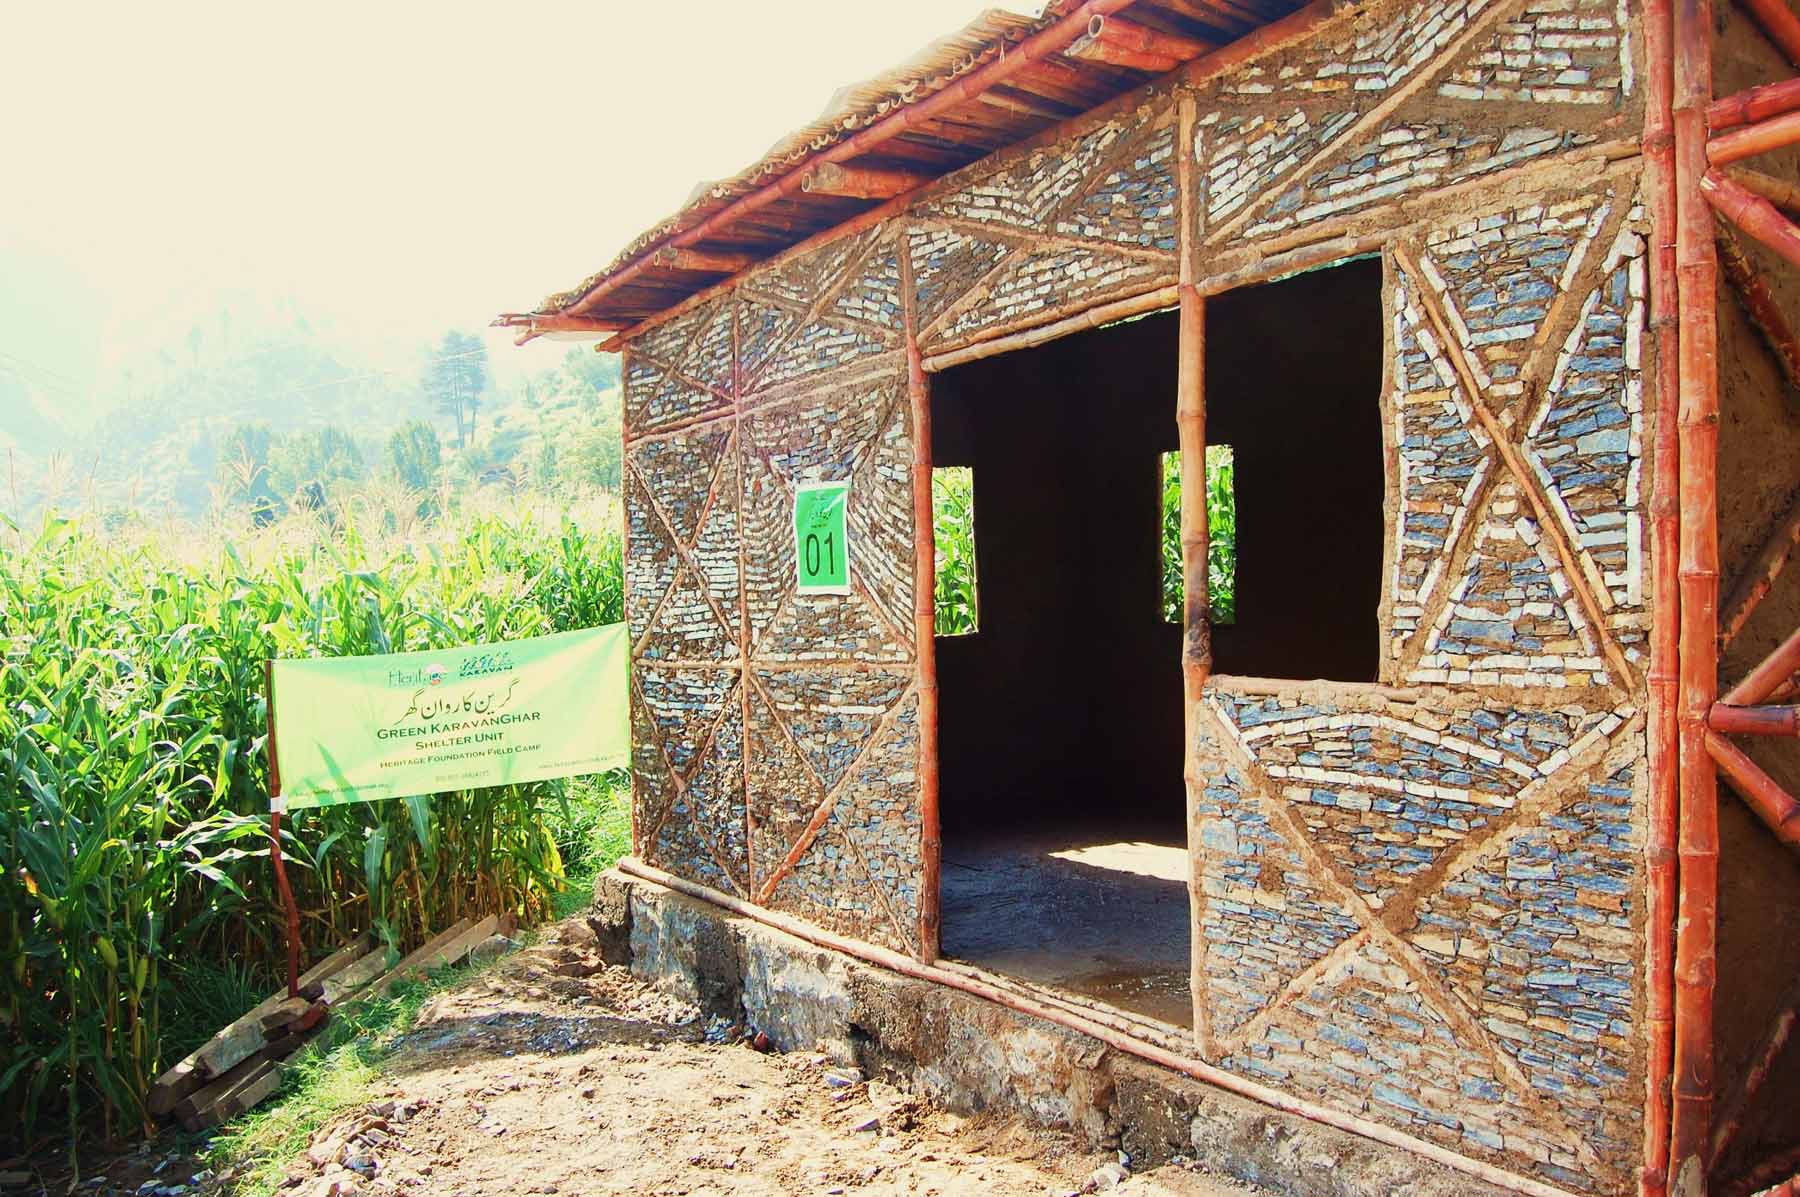 Earthquake Reconstruction Shelter, 2000. Designed By Yasmeen Lari